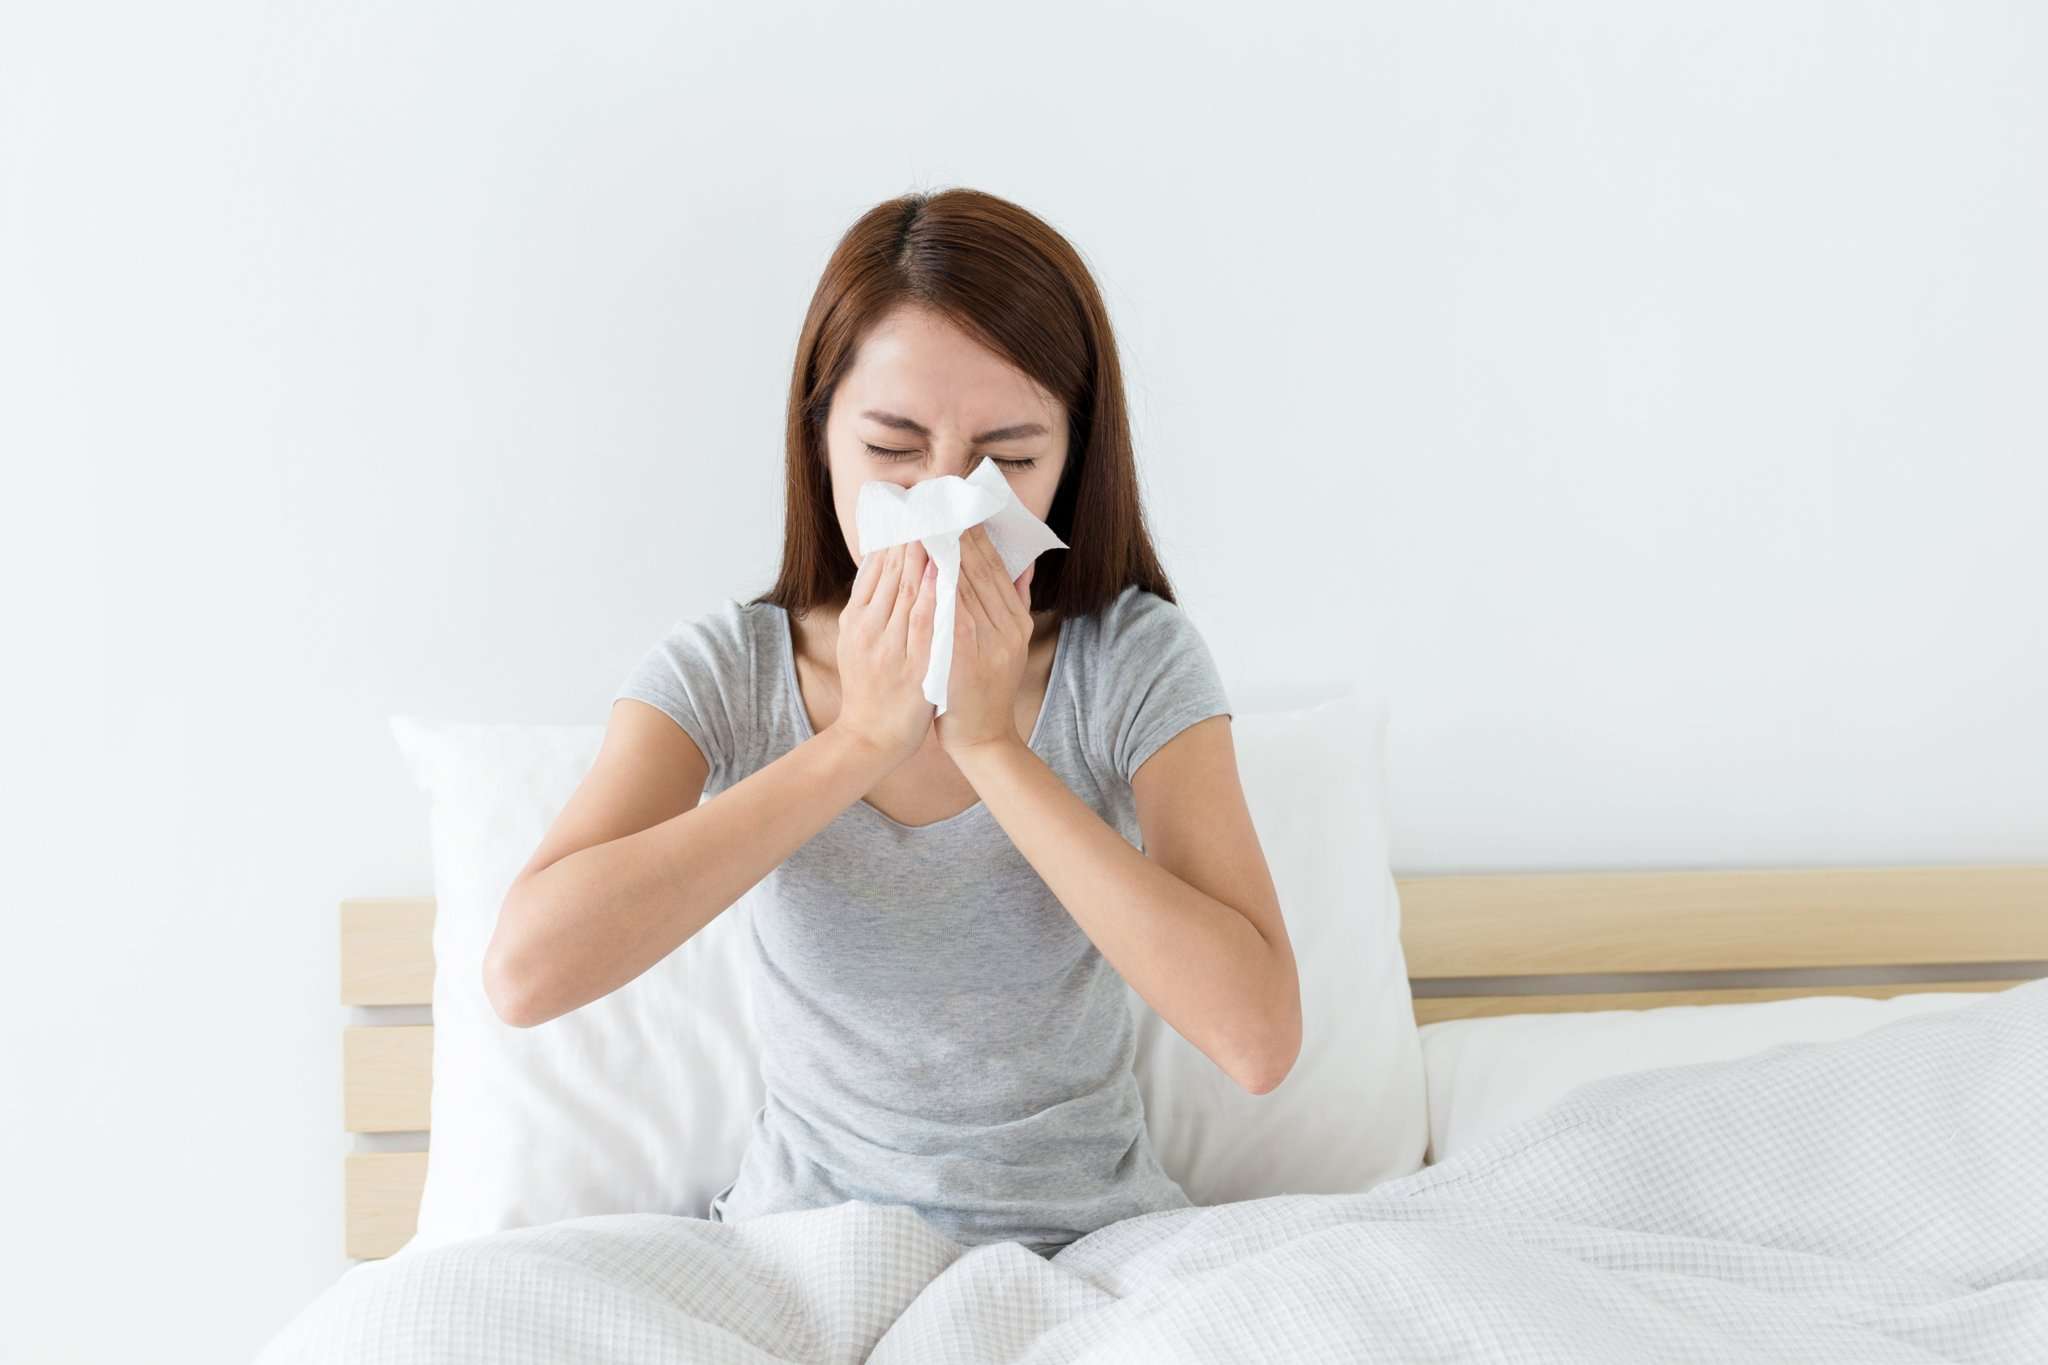 Do Allergies Cause Insomnia?